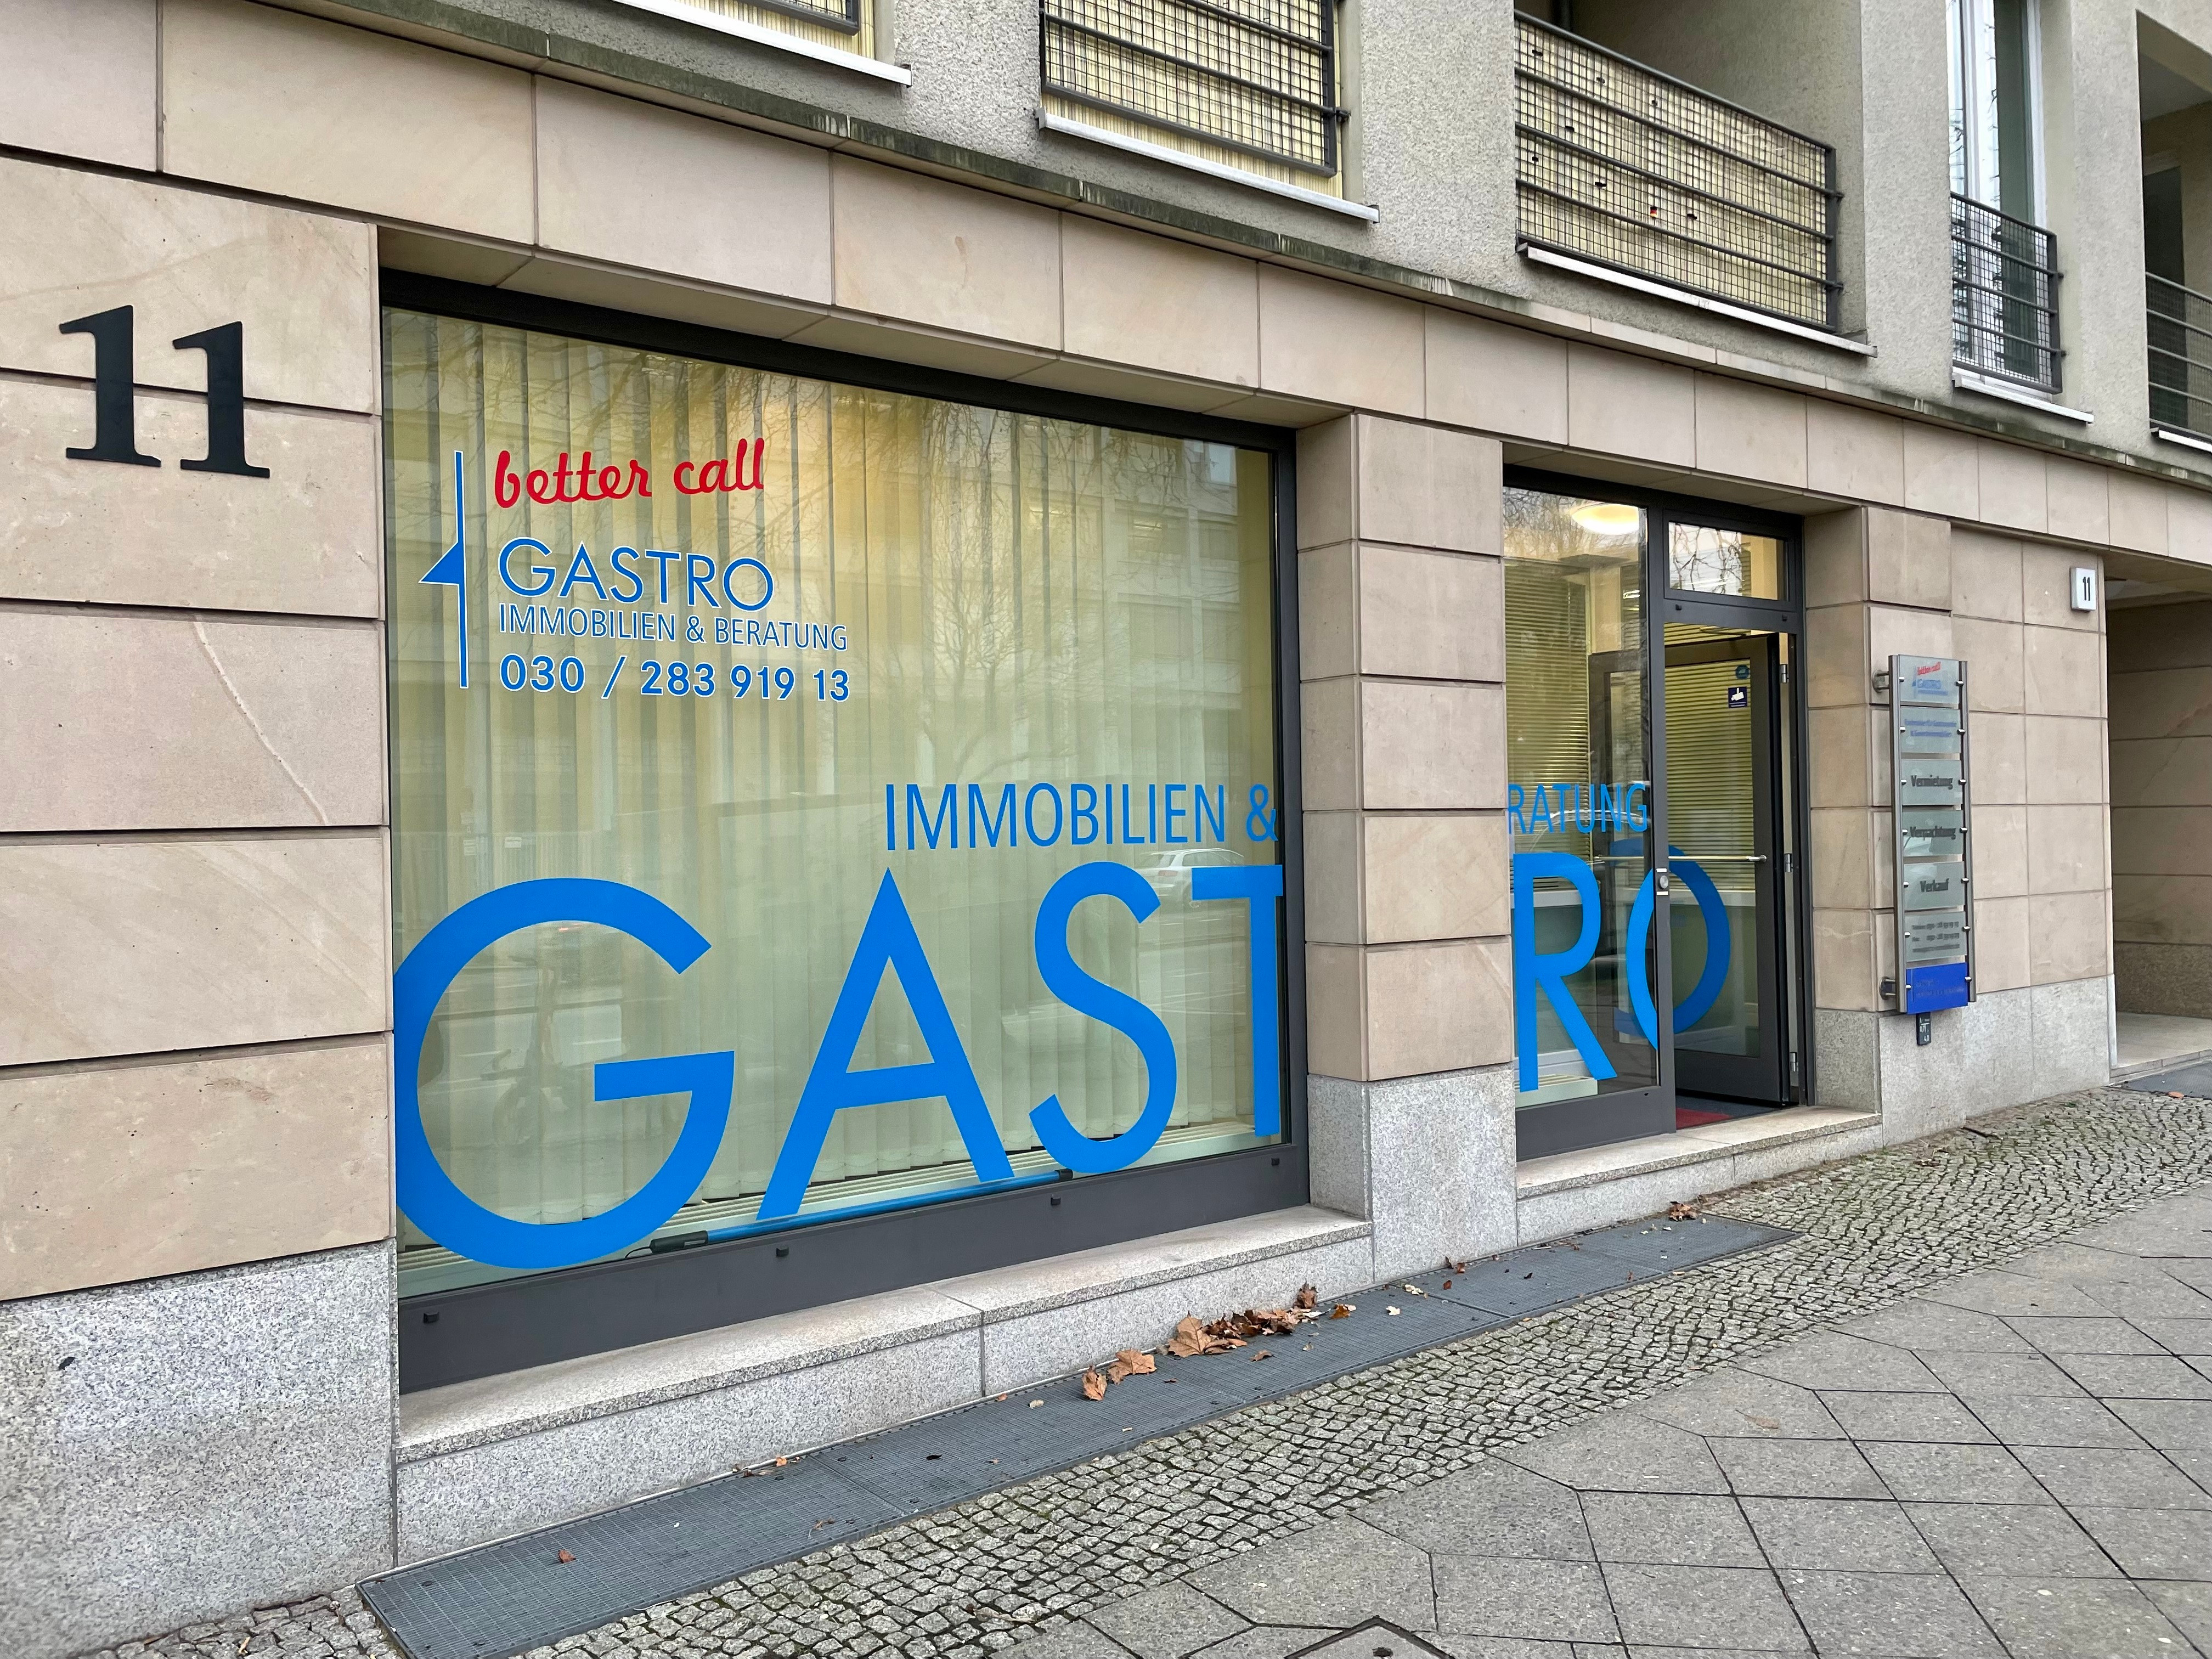 Gastro.-Immobilien & Beratung e.K., Stülerstrasse 11 in Berlin